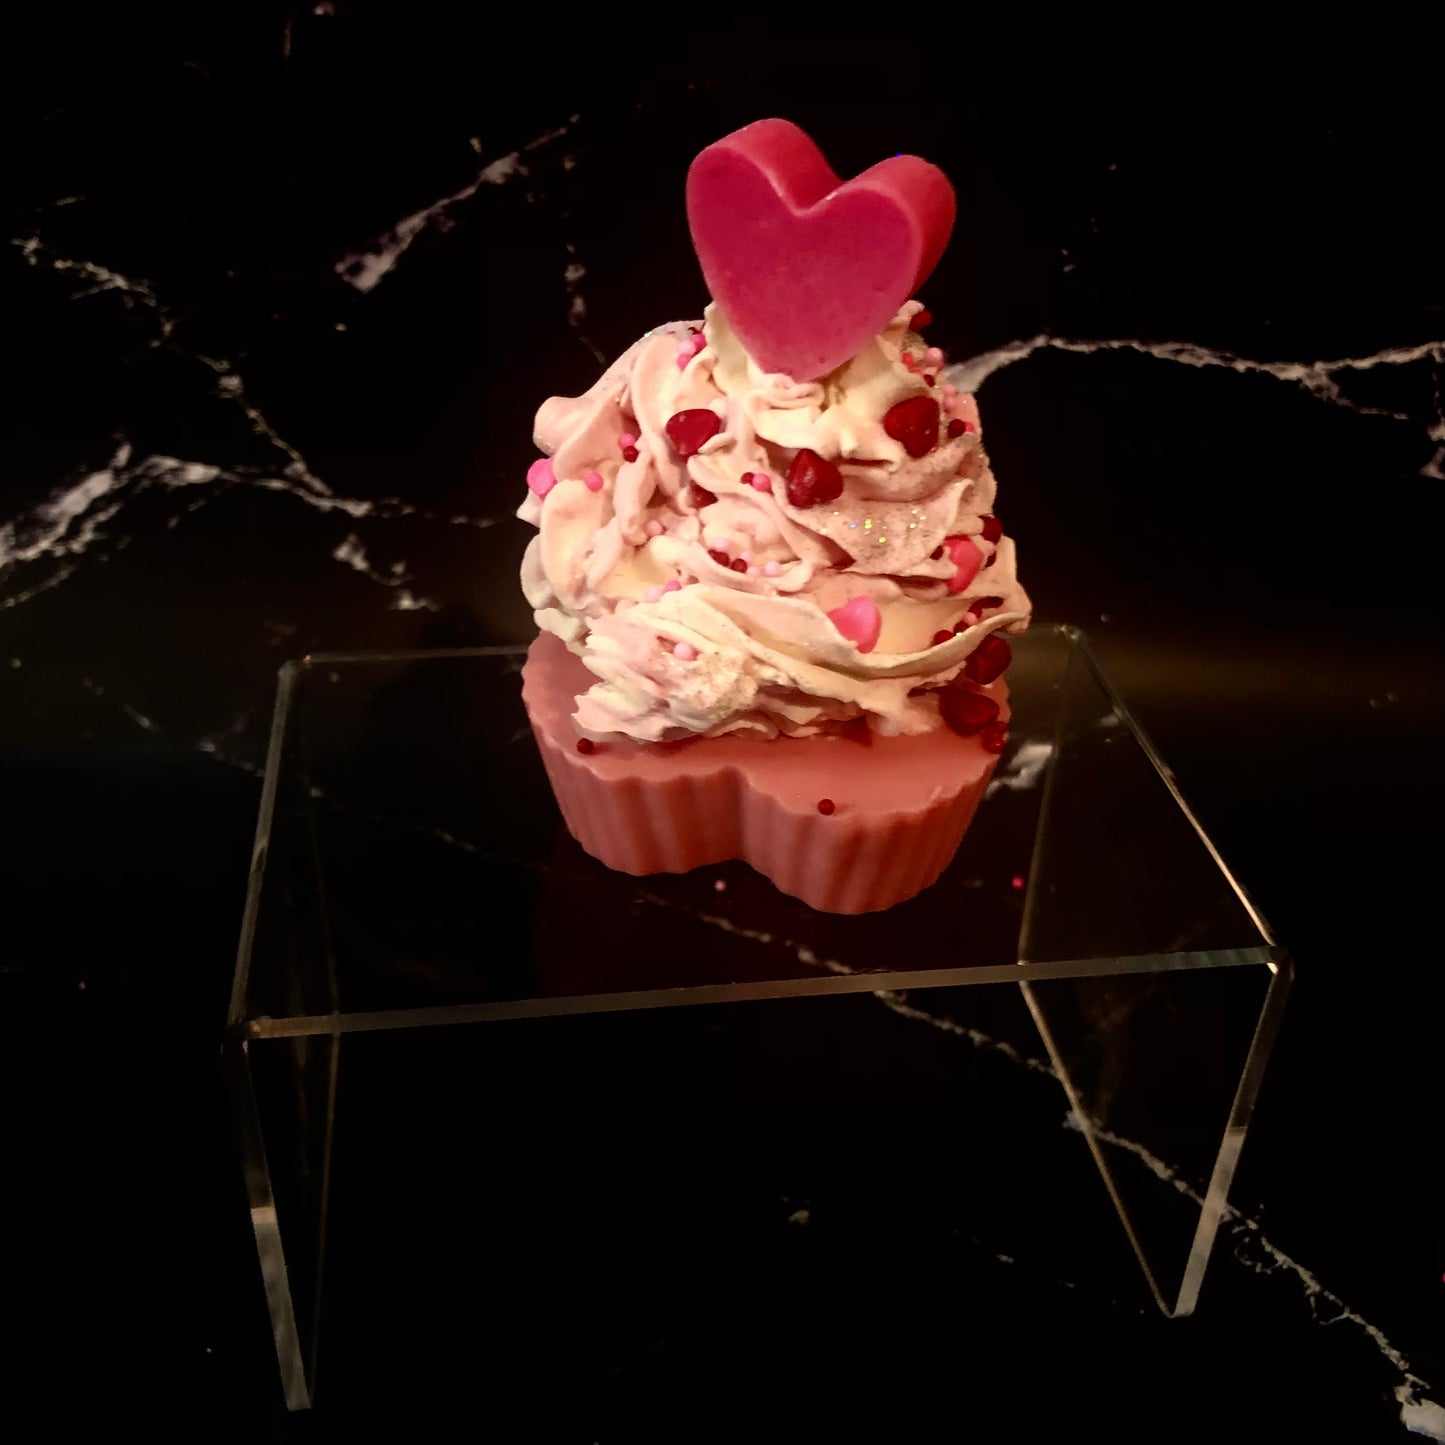 Heart Valentine's Day Cupcake Soap Handmade Fun Gift Gluten-free Sulphate -Free Handcrafted Homemade Candy Romantic Romance Girlfriend Boyfriend